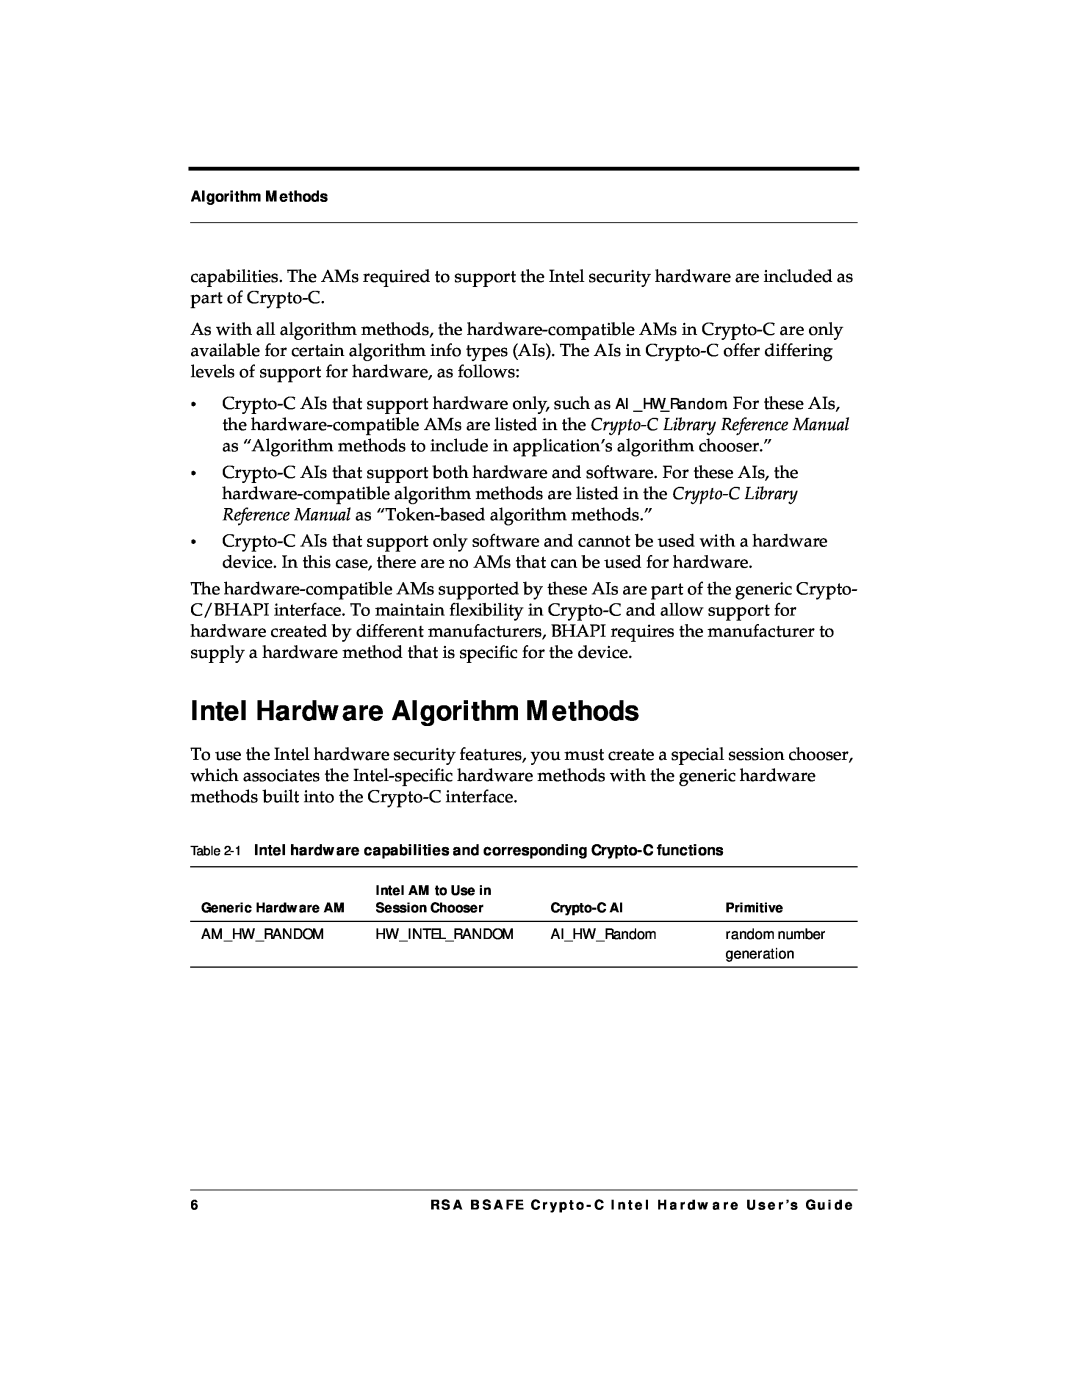 RSA Security 4.3 manual Intel Hardware Algorithm Methods 